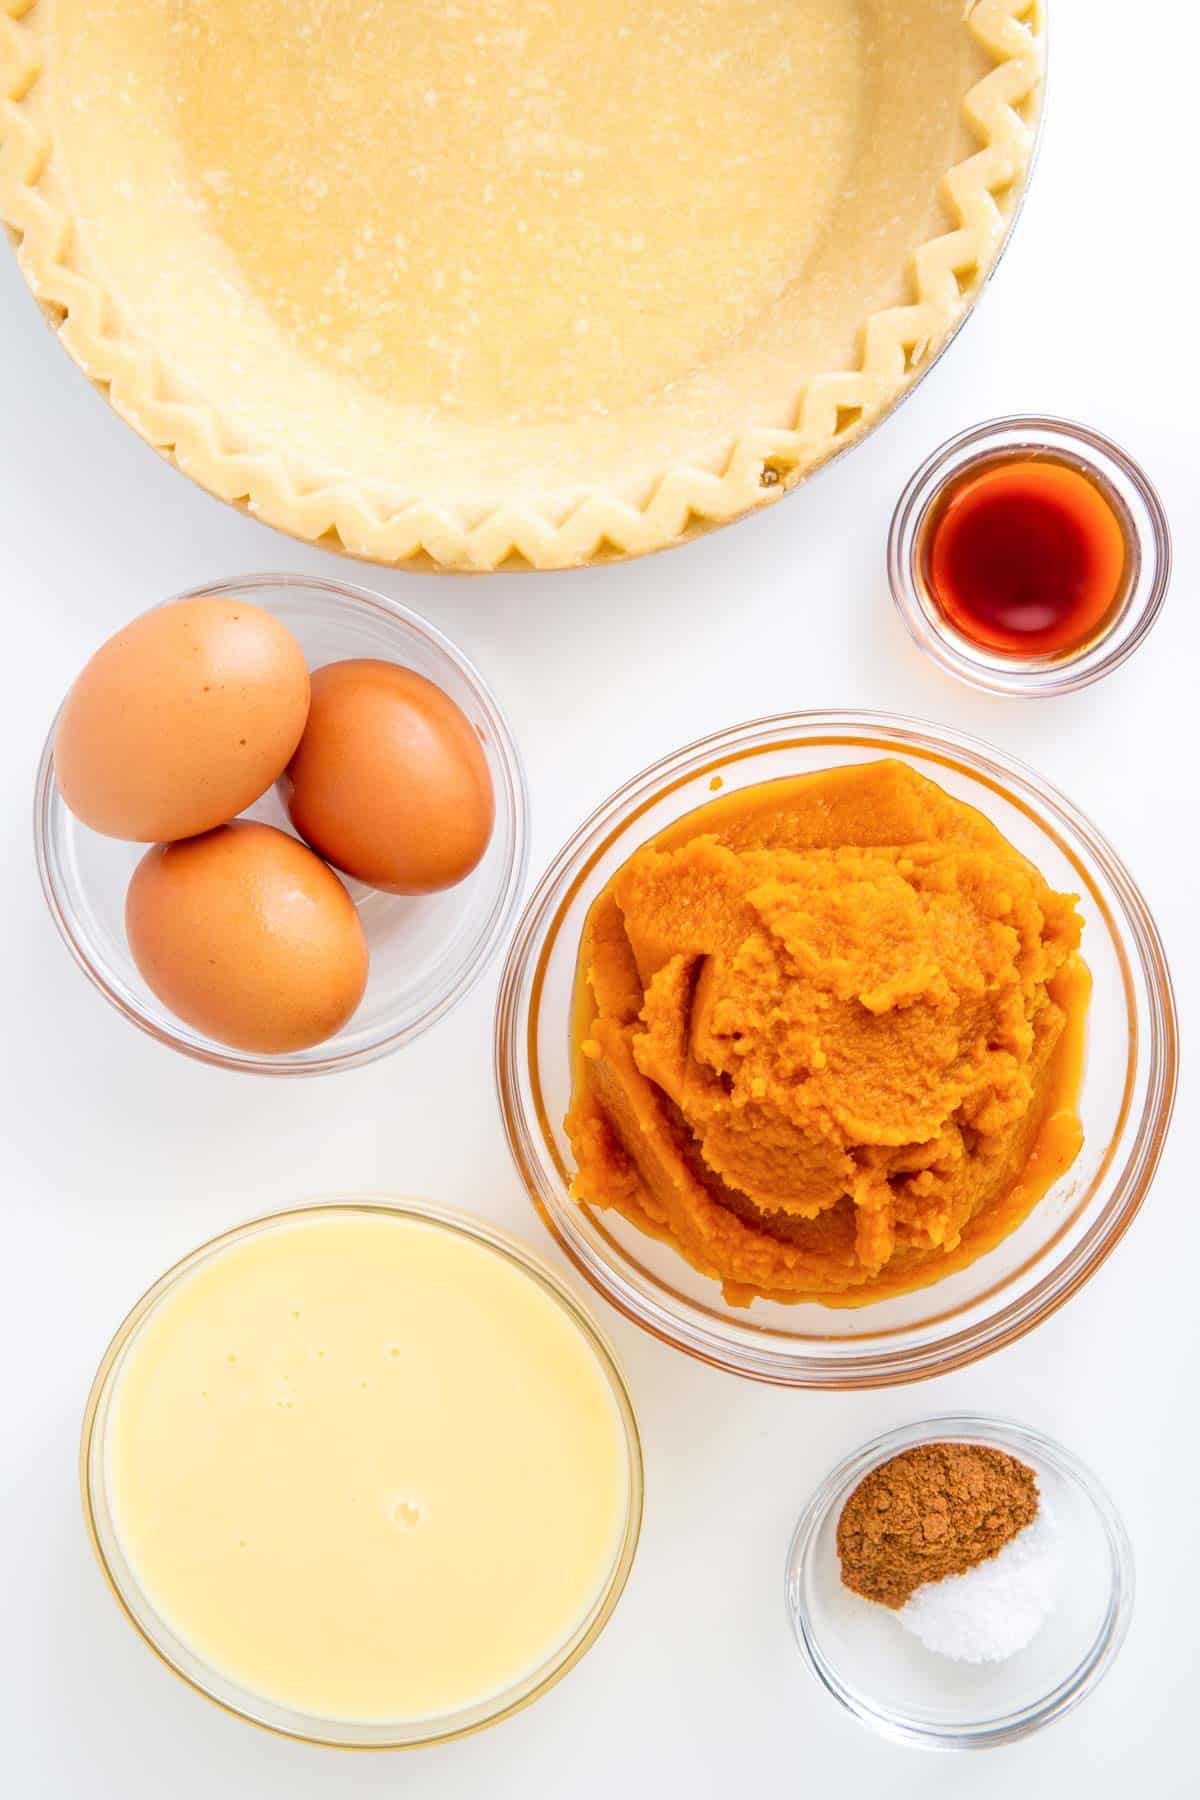 Image of ingredients needed to make pumpkin pie with condensed milk.